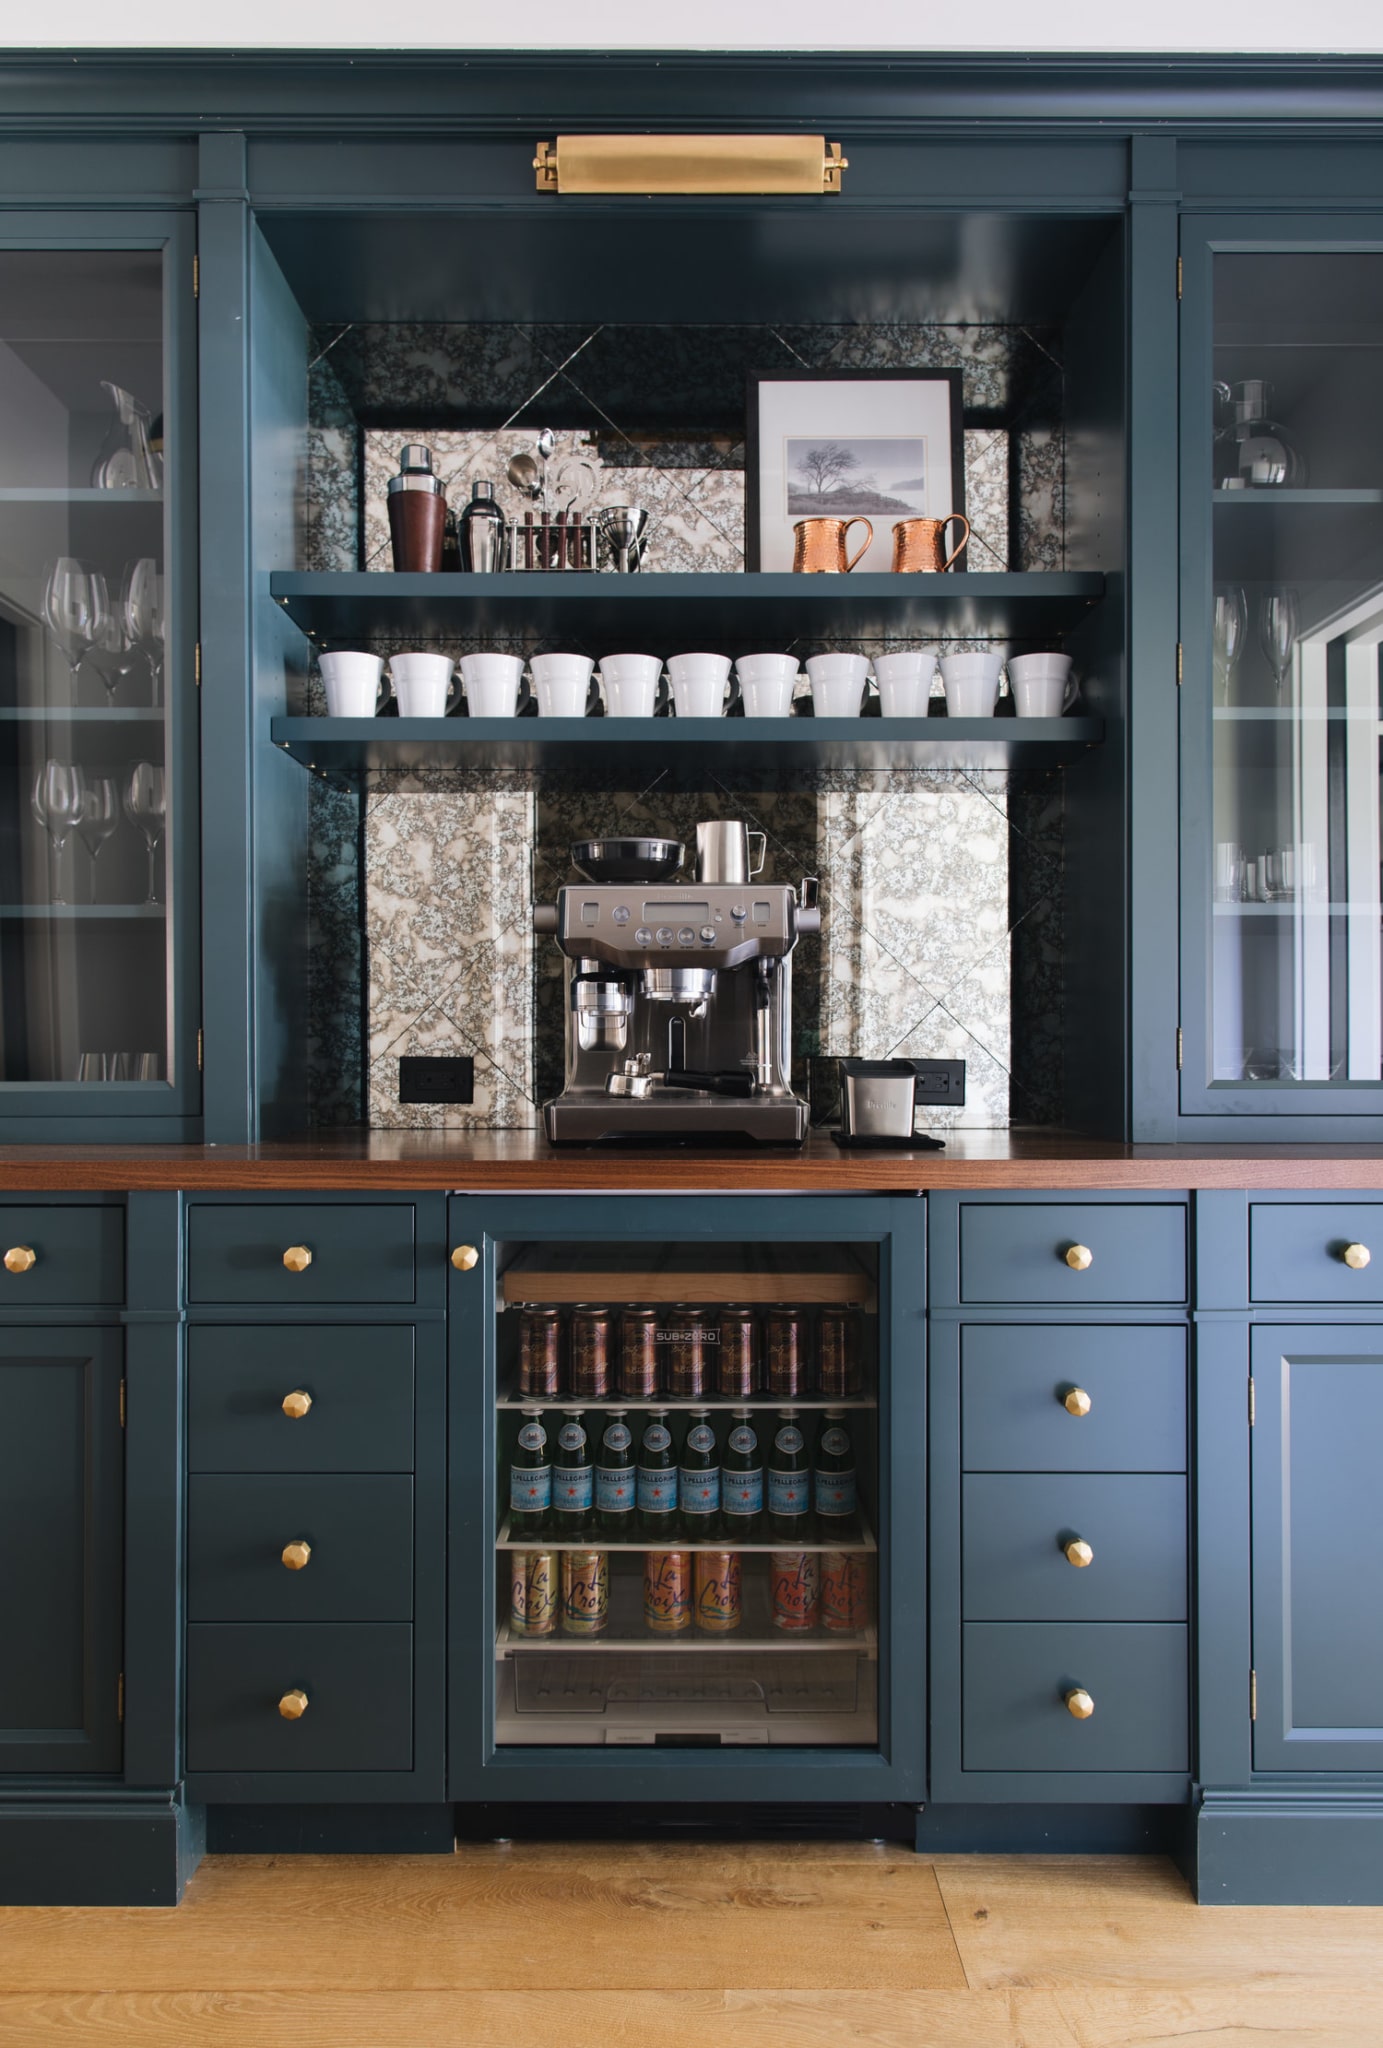 Jean Stoffer Design - Stoffer Photography Interiors - kitchen - kitchen design - coffee bar - coffee bar design - library light